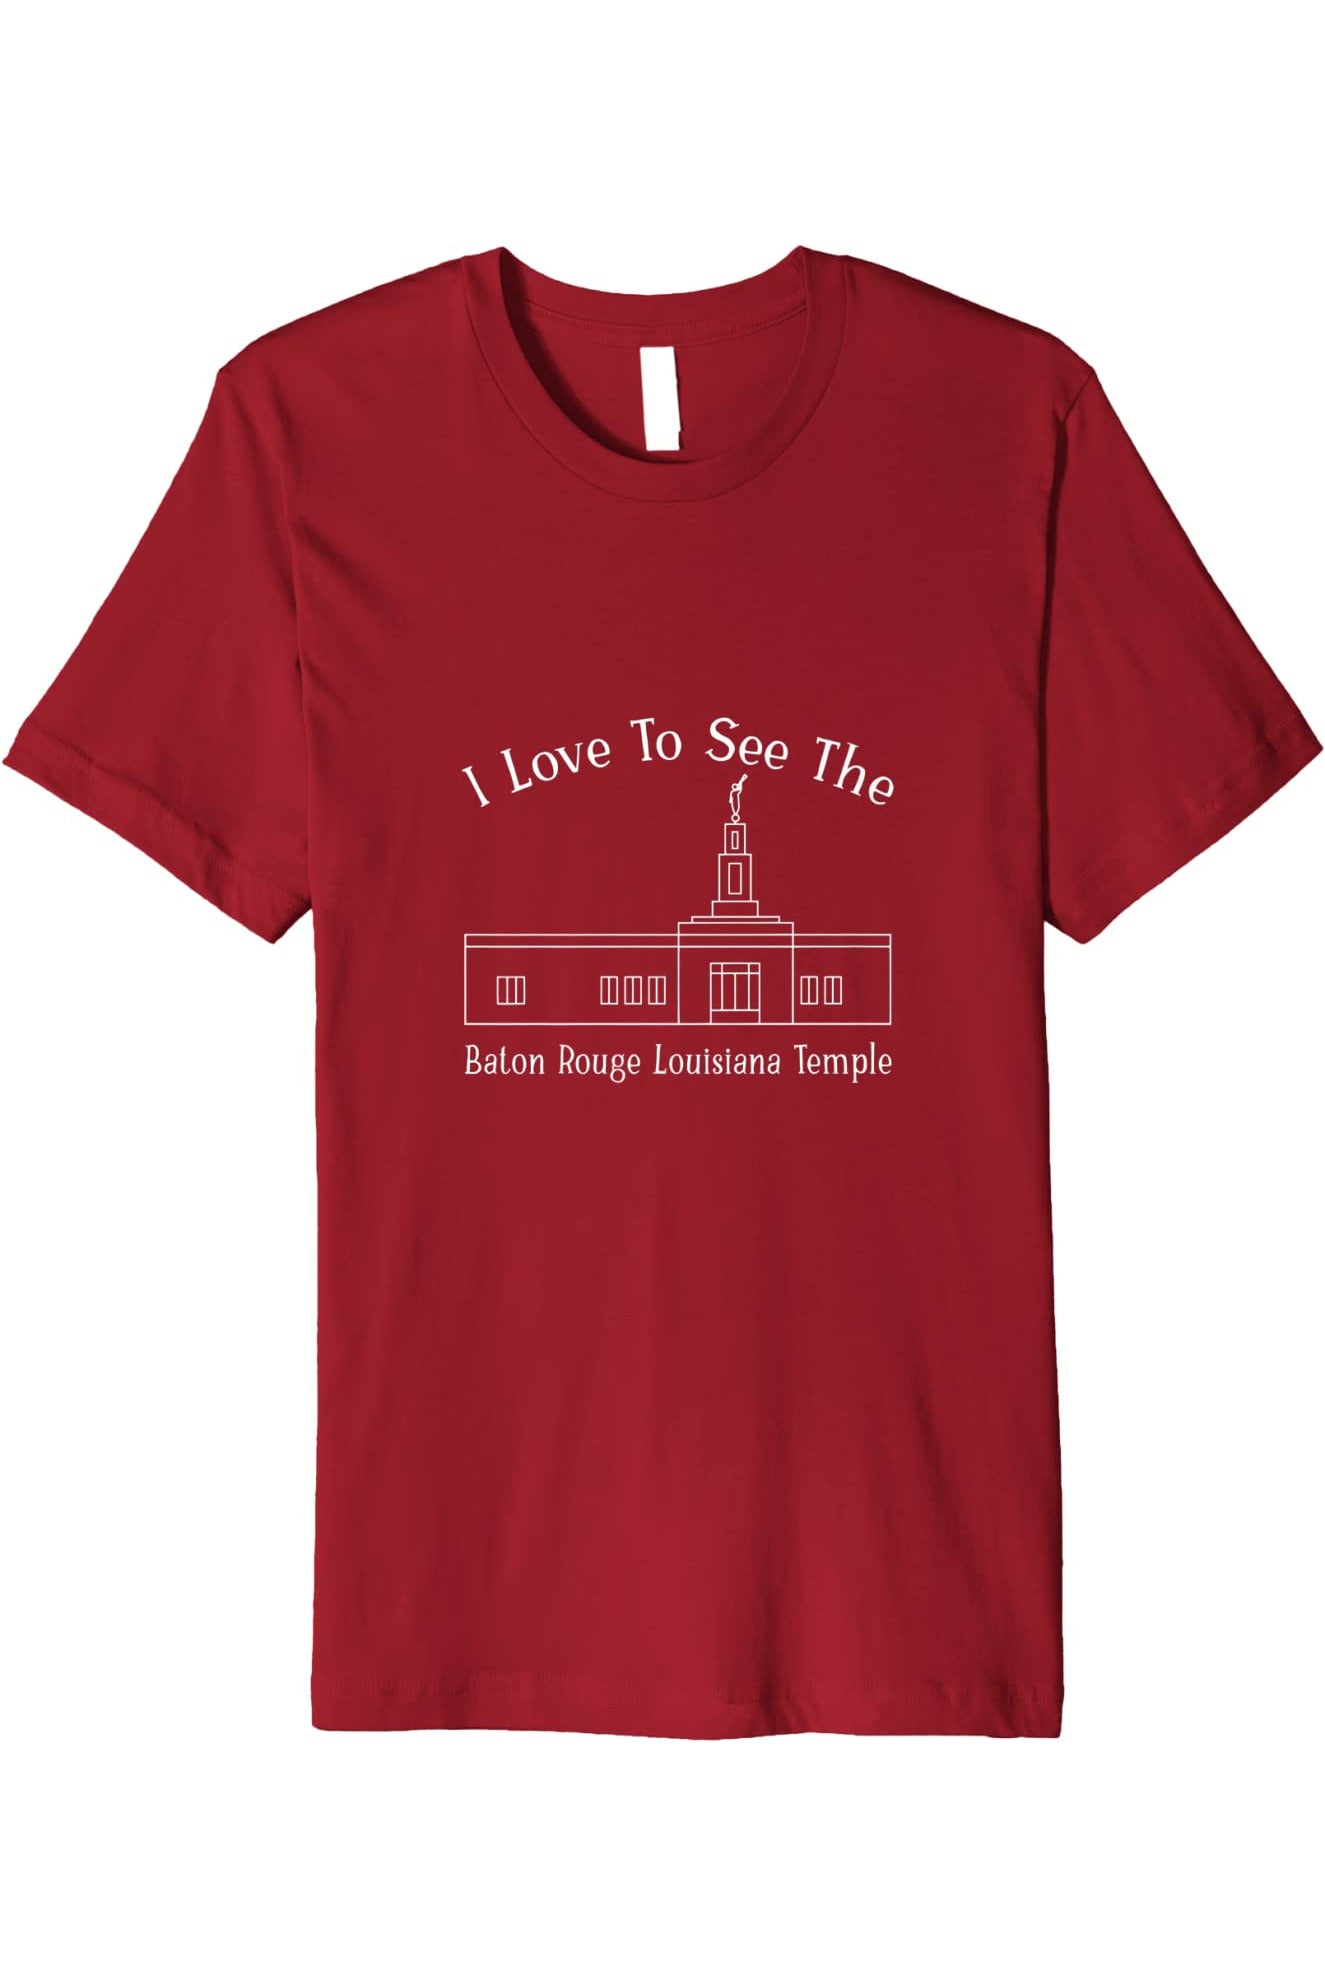 Baton Rouge Louisiana Temple T-Shirt - Premium - Happy Style (English) US